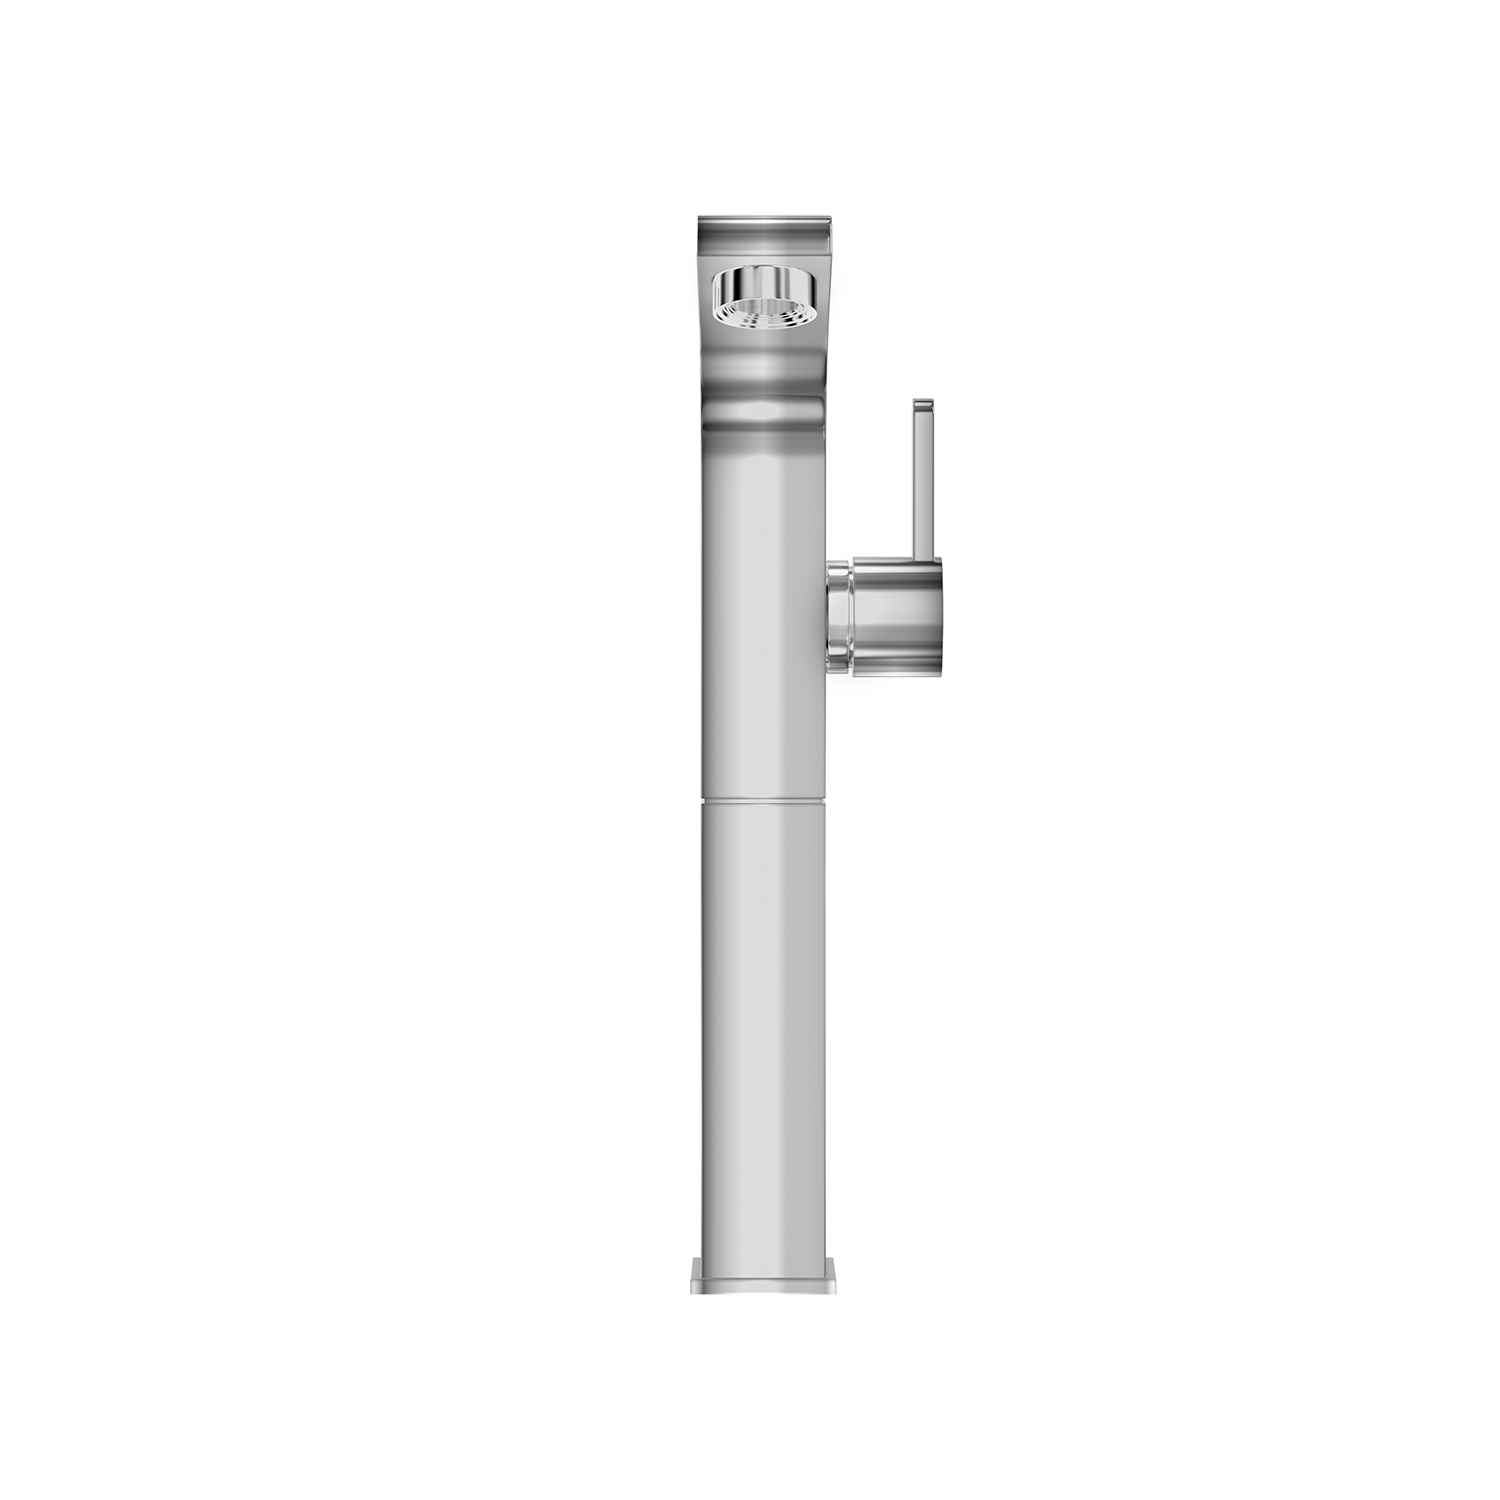 DAX Single Handle Vessel Sink Bathroom Faucet, Brass Body, Chrome Finish, 4-3/4 x 12-1/8 Inches (DAX-8220B-CR)